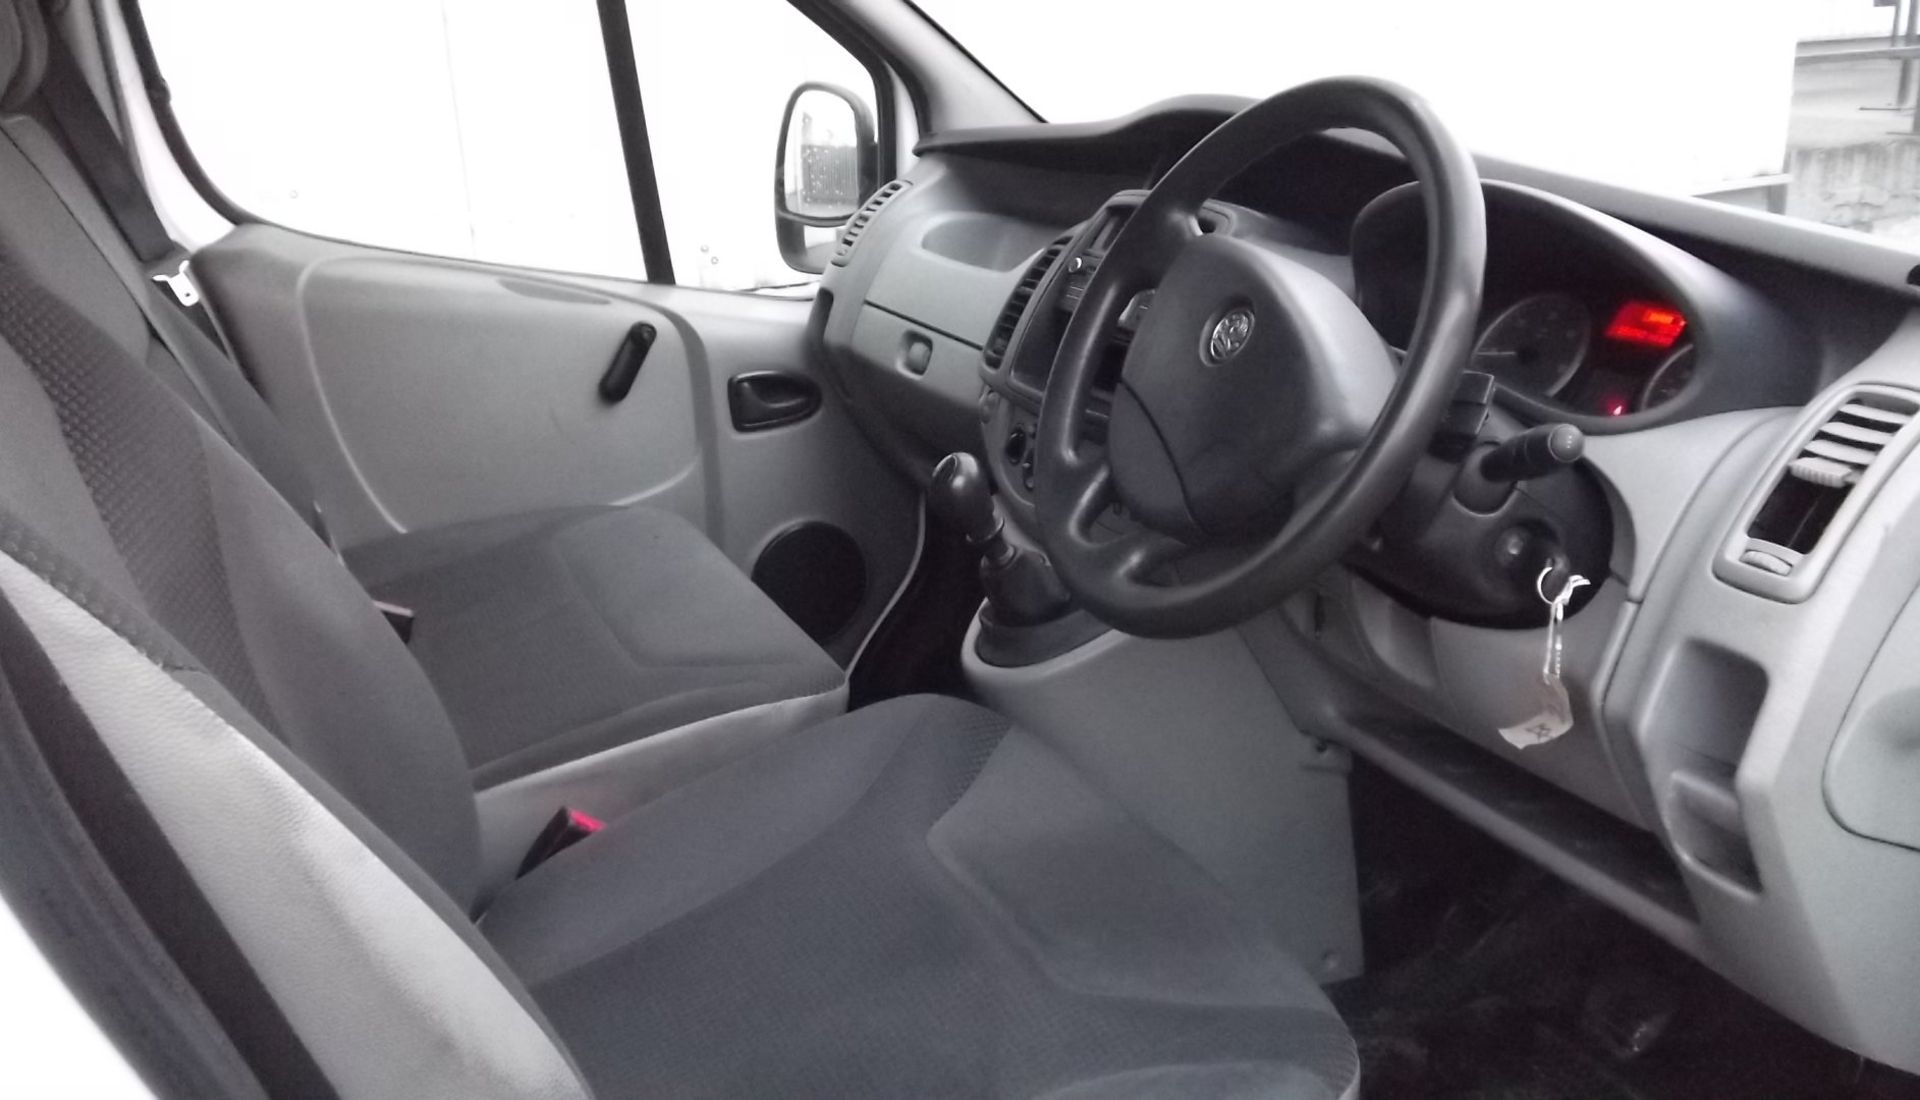 2014 Vauxhall Vivaro 2900 Cdti Lwb high roof panel van 5Dr - Image 5 of 12